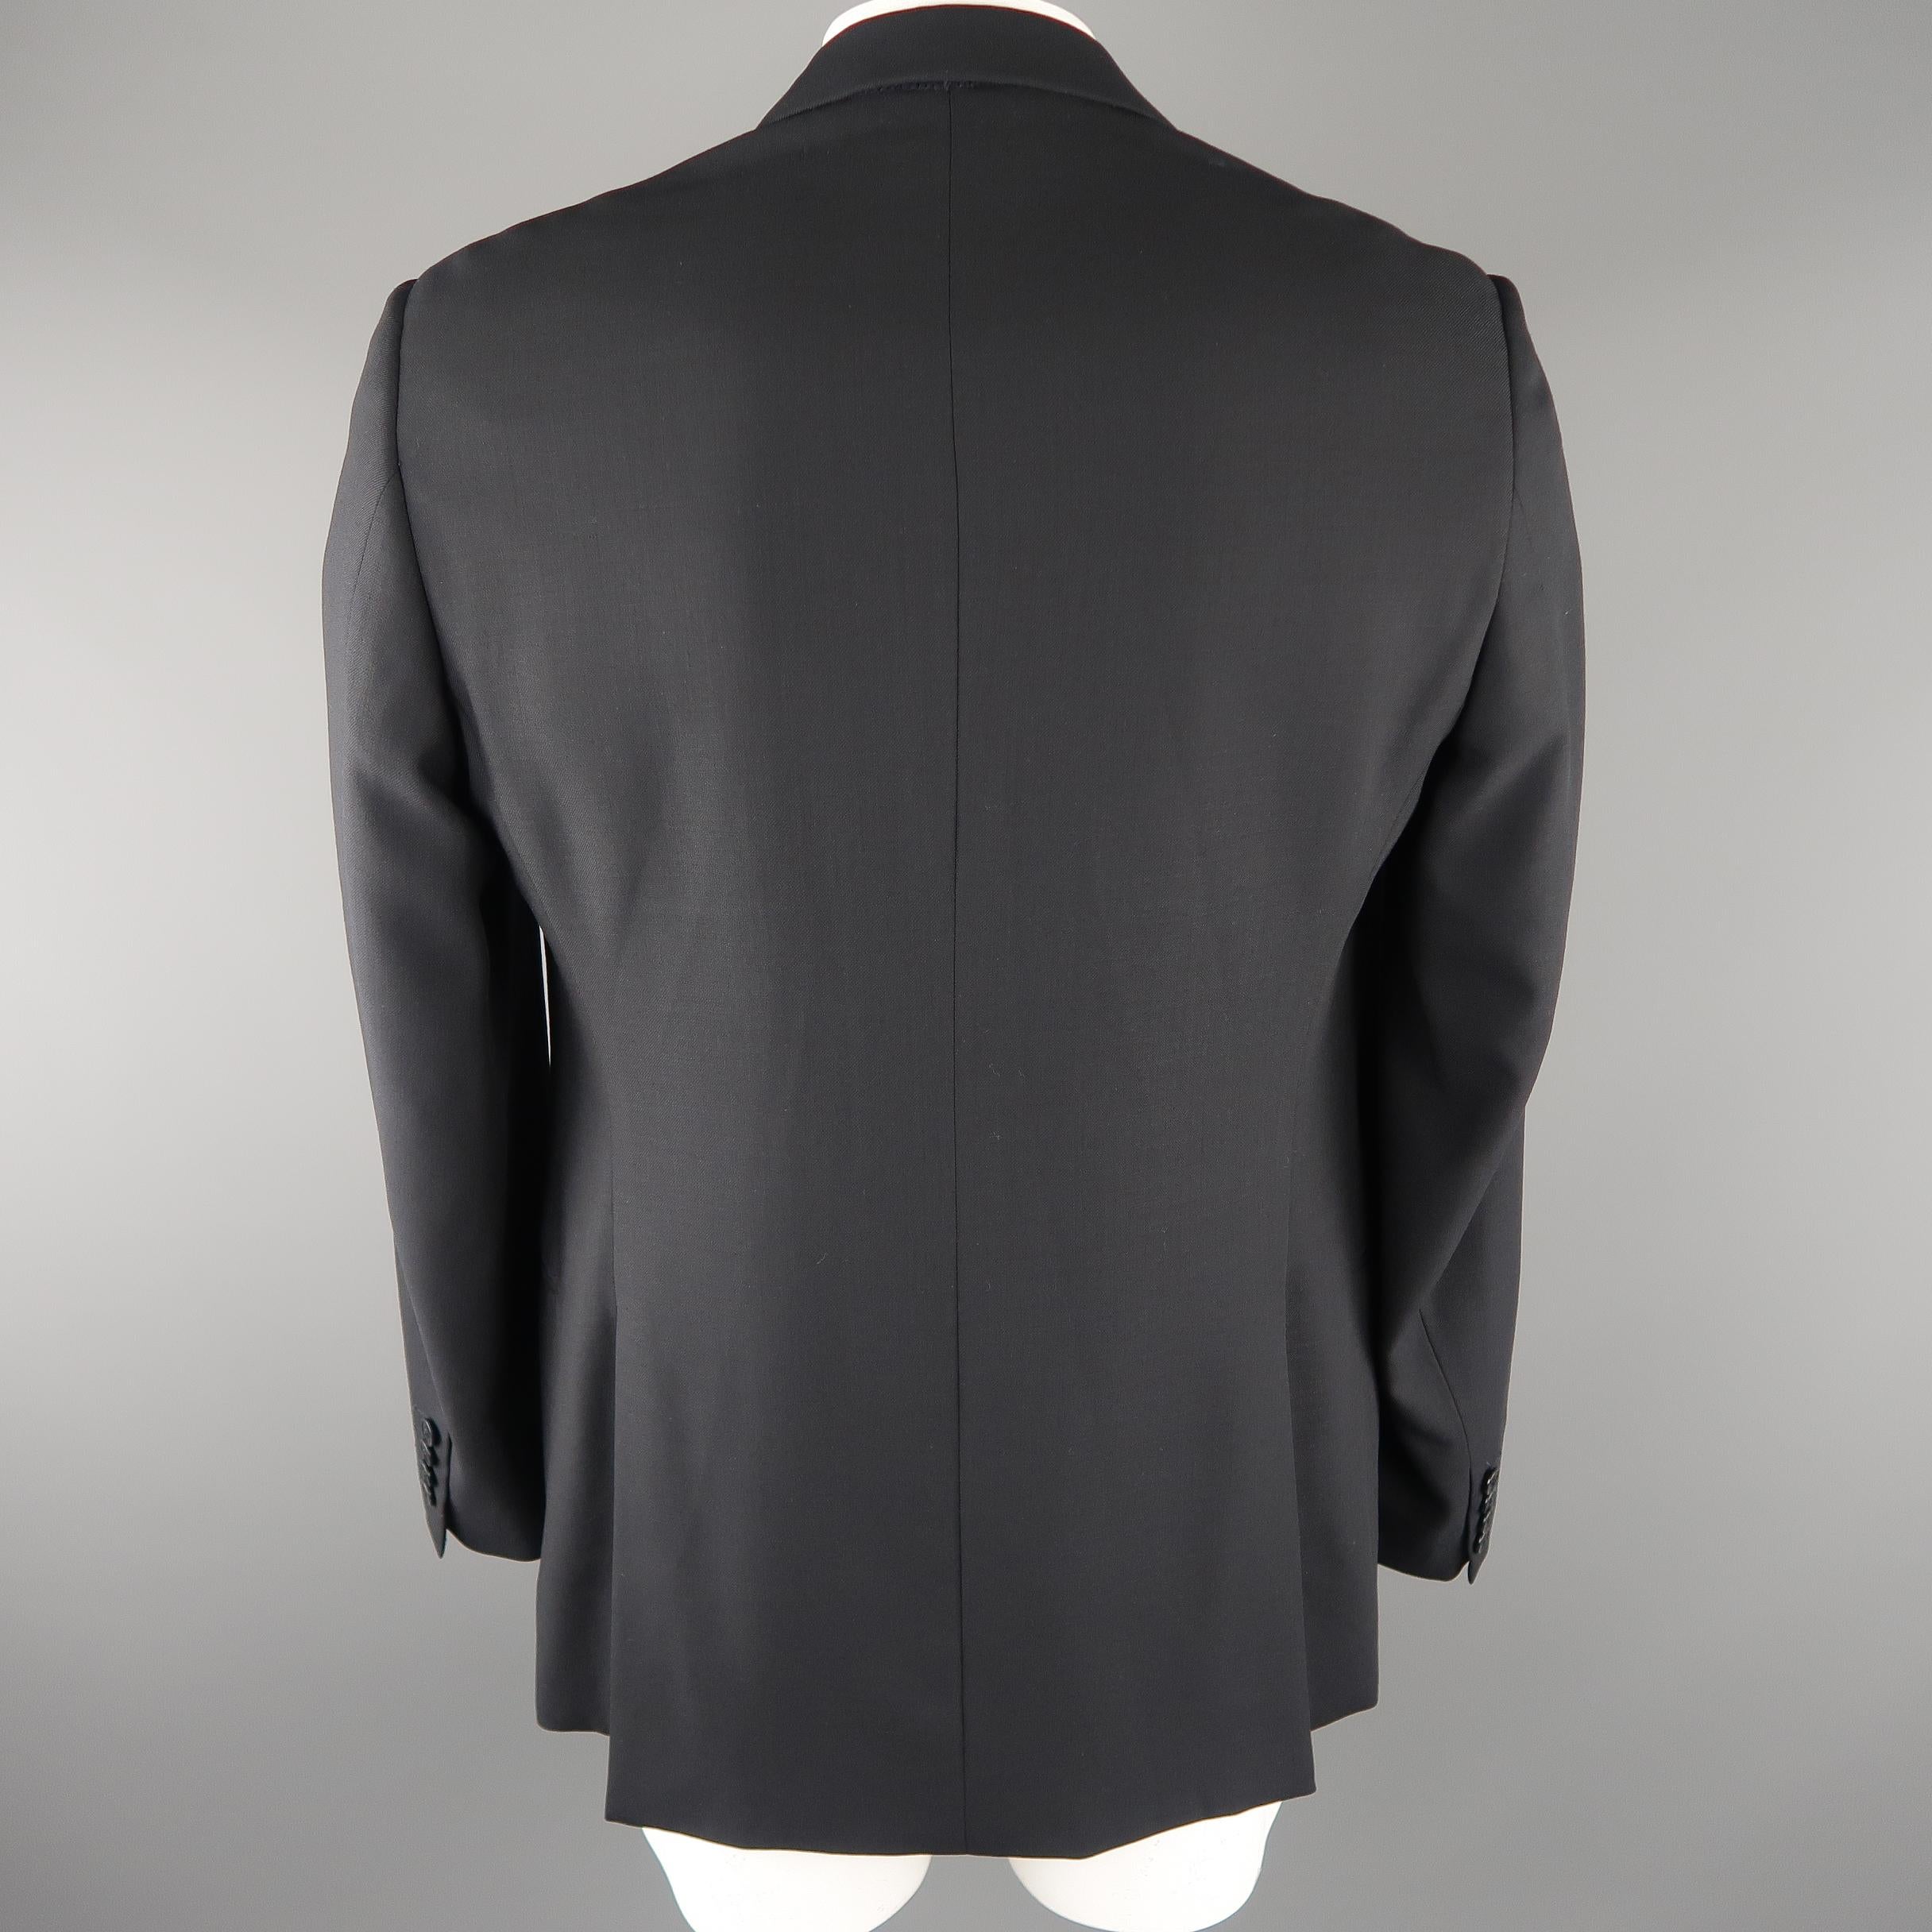 Black ARMANI COLLEZIONI 42 Regular Navy Solid Wool Blazer / Sport Coat